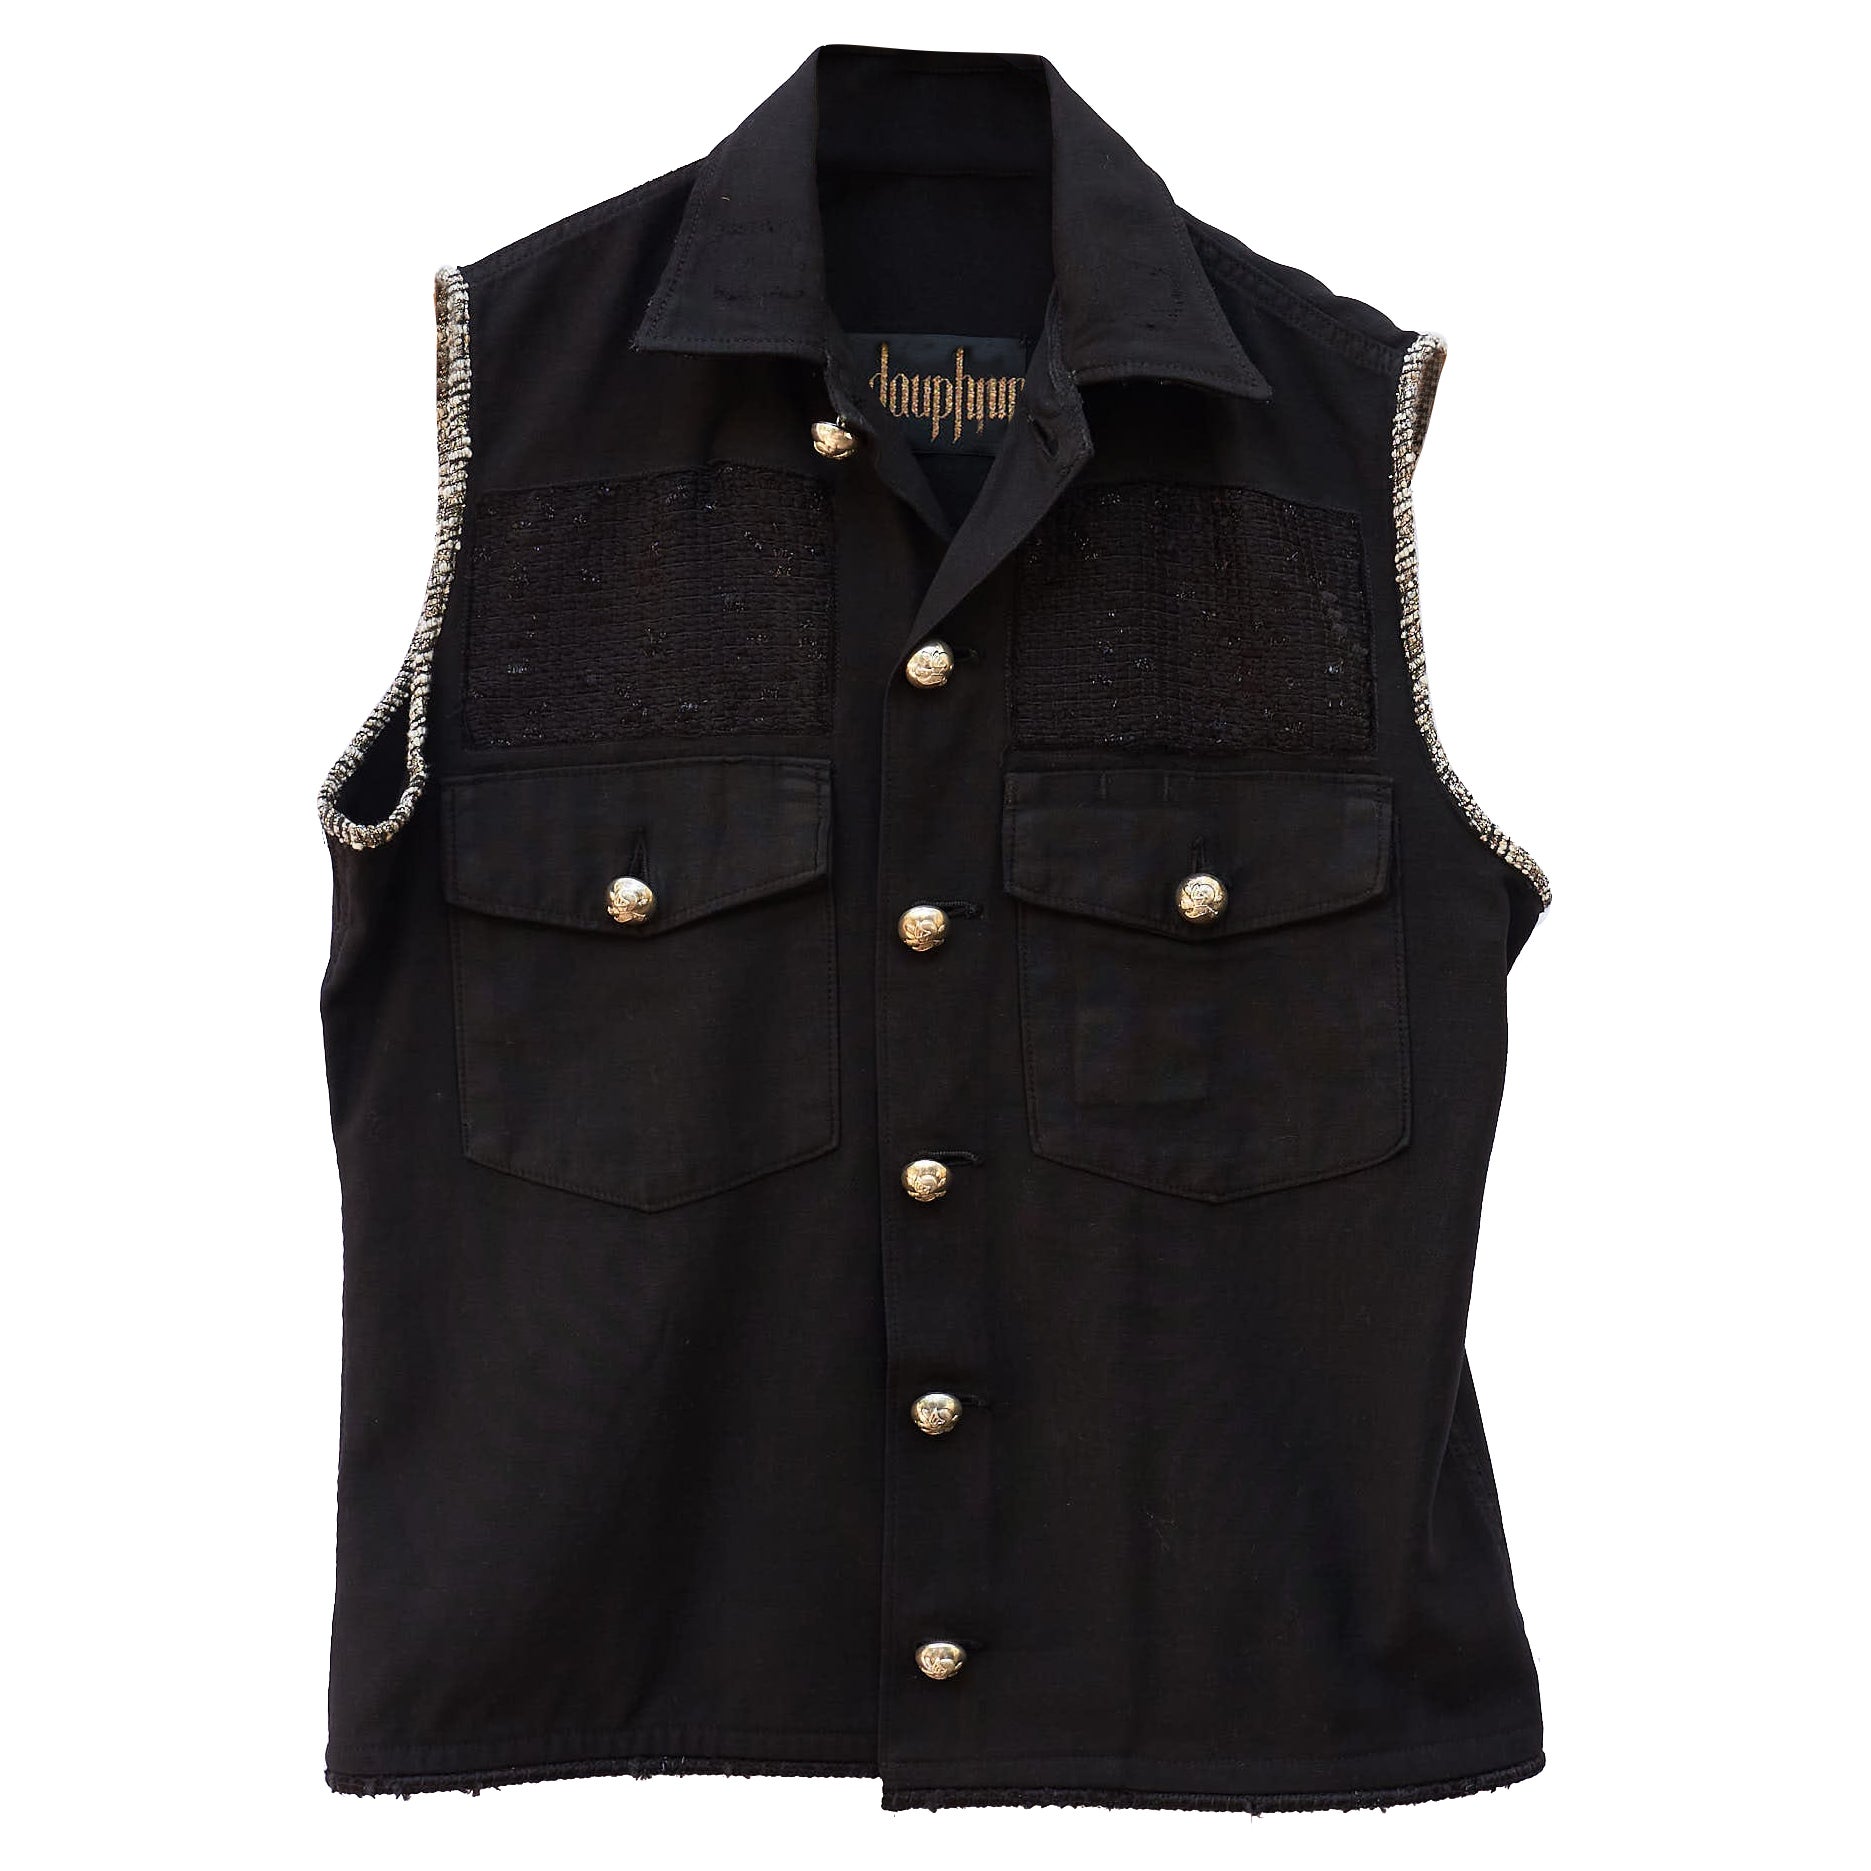 Sleeveless Jacket Vest Military Embellished Black Tweed Silver Buttons J Dauphin